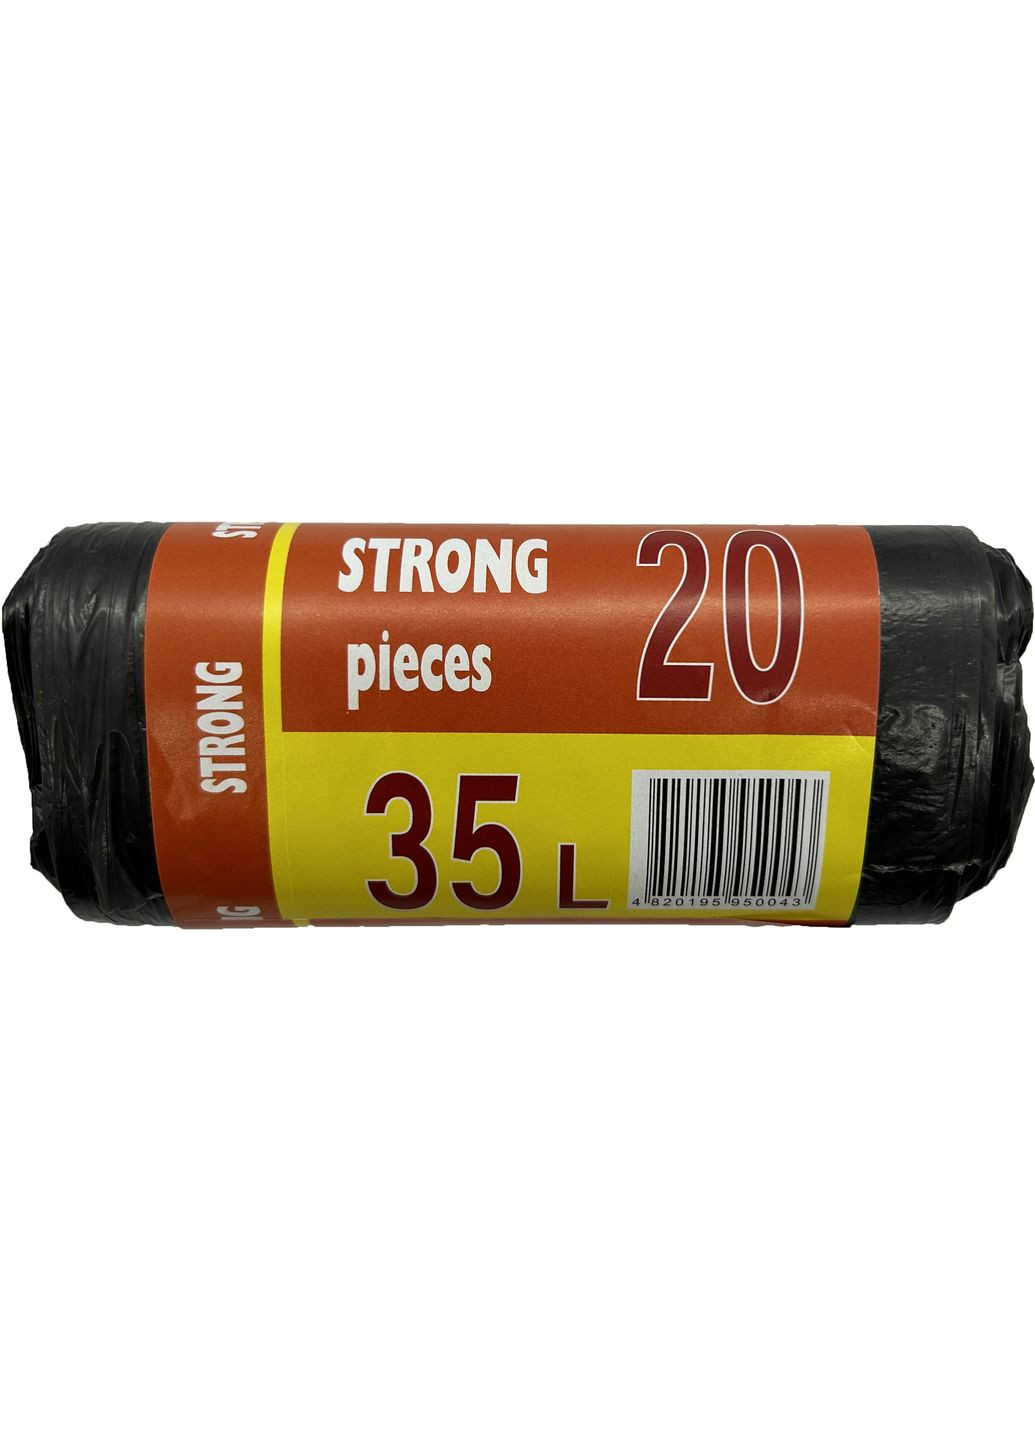 Упаковка пакетов для мусора Strong 35 л 20 шт No Brand (262609036)